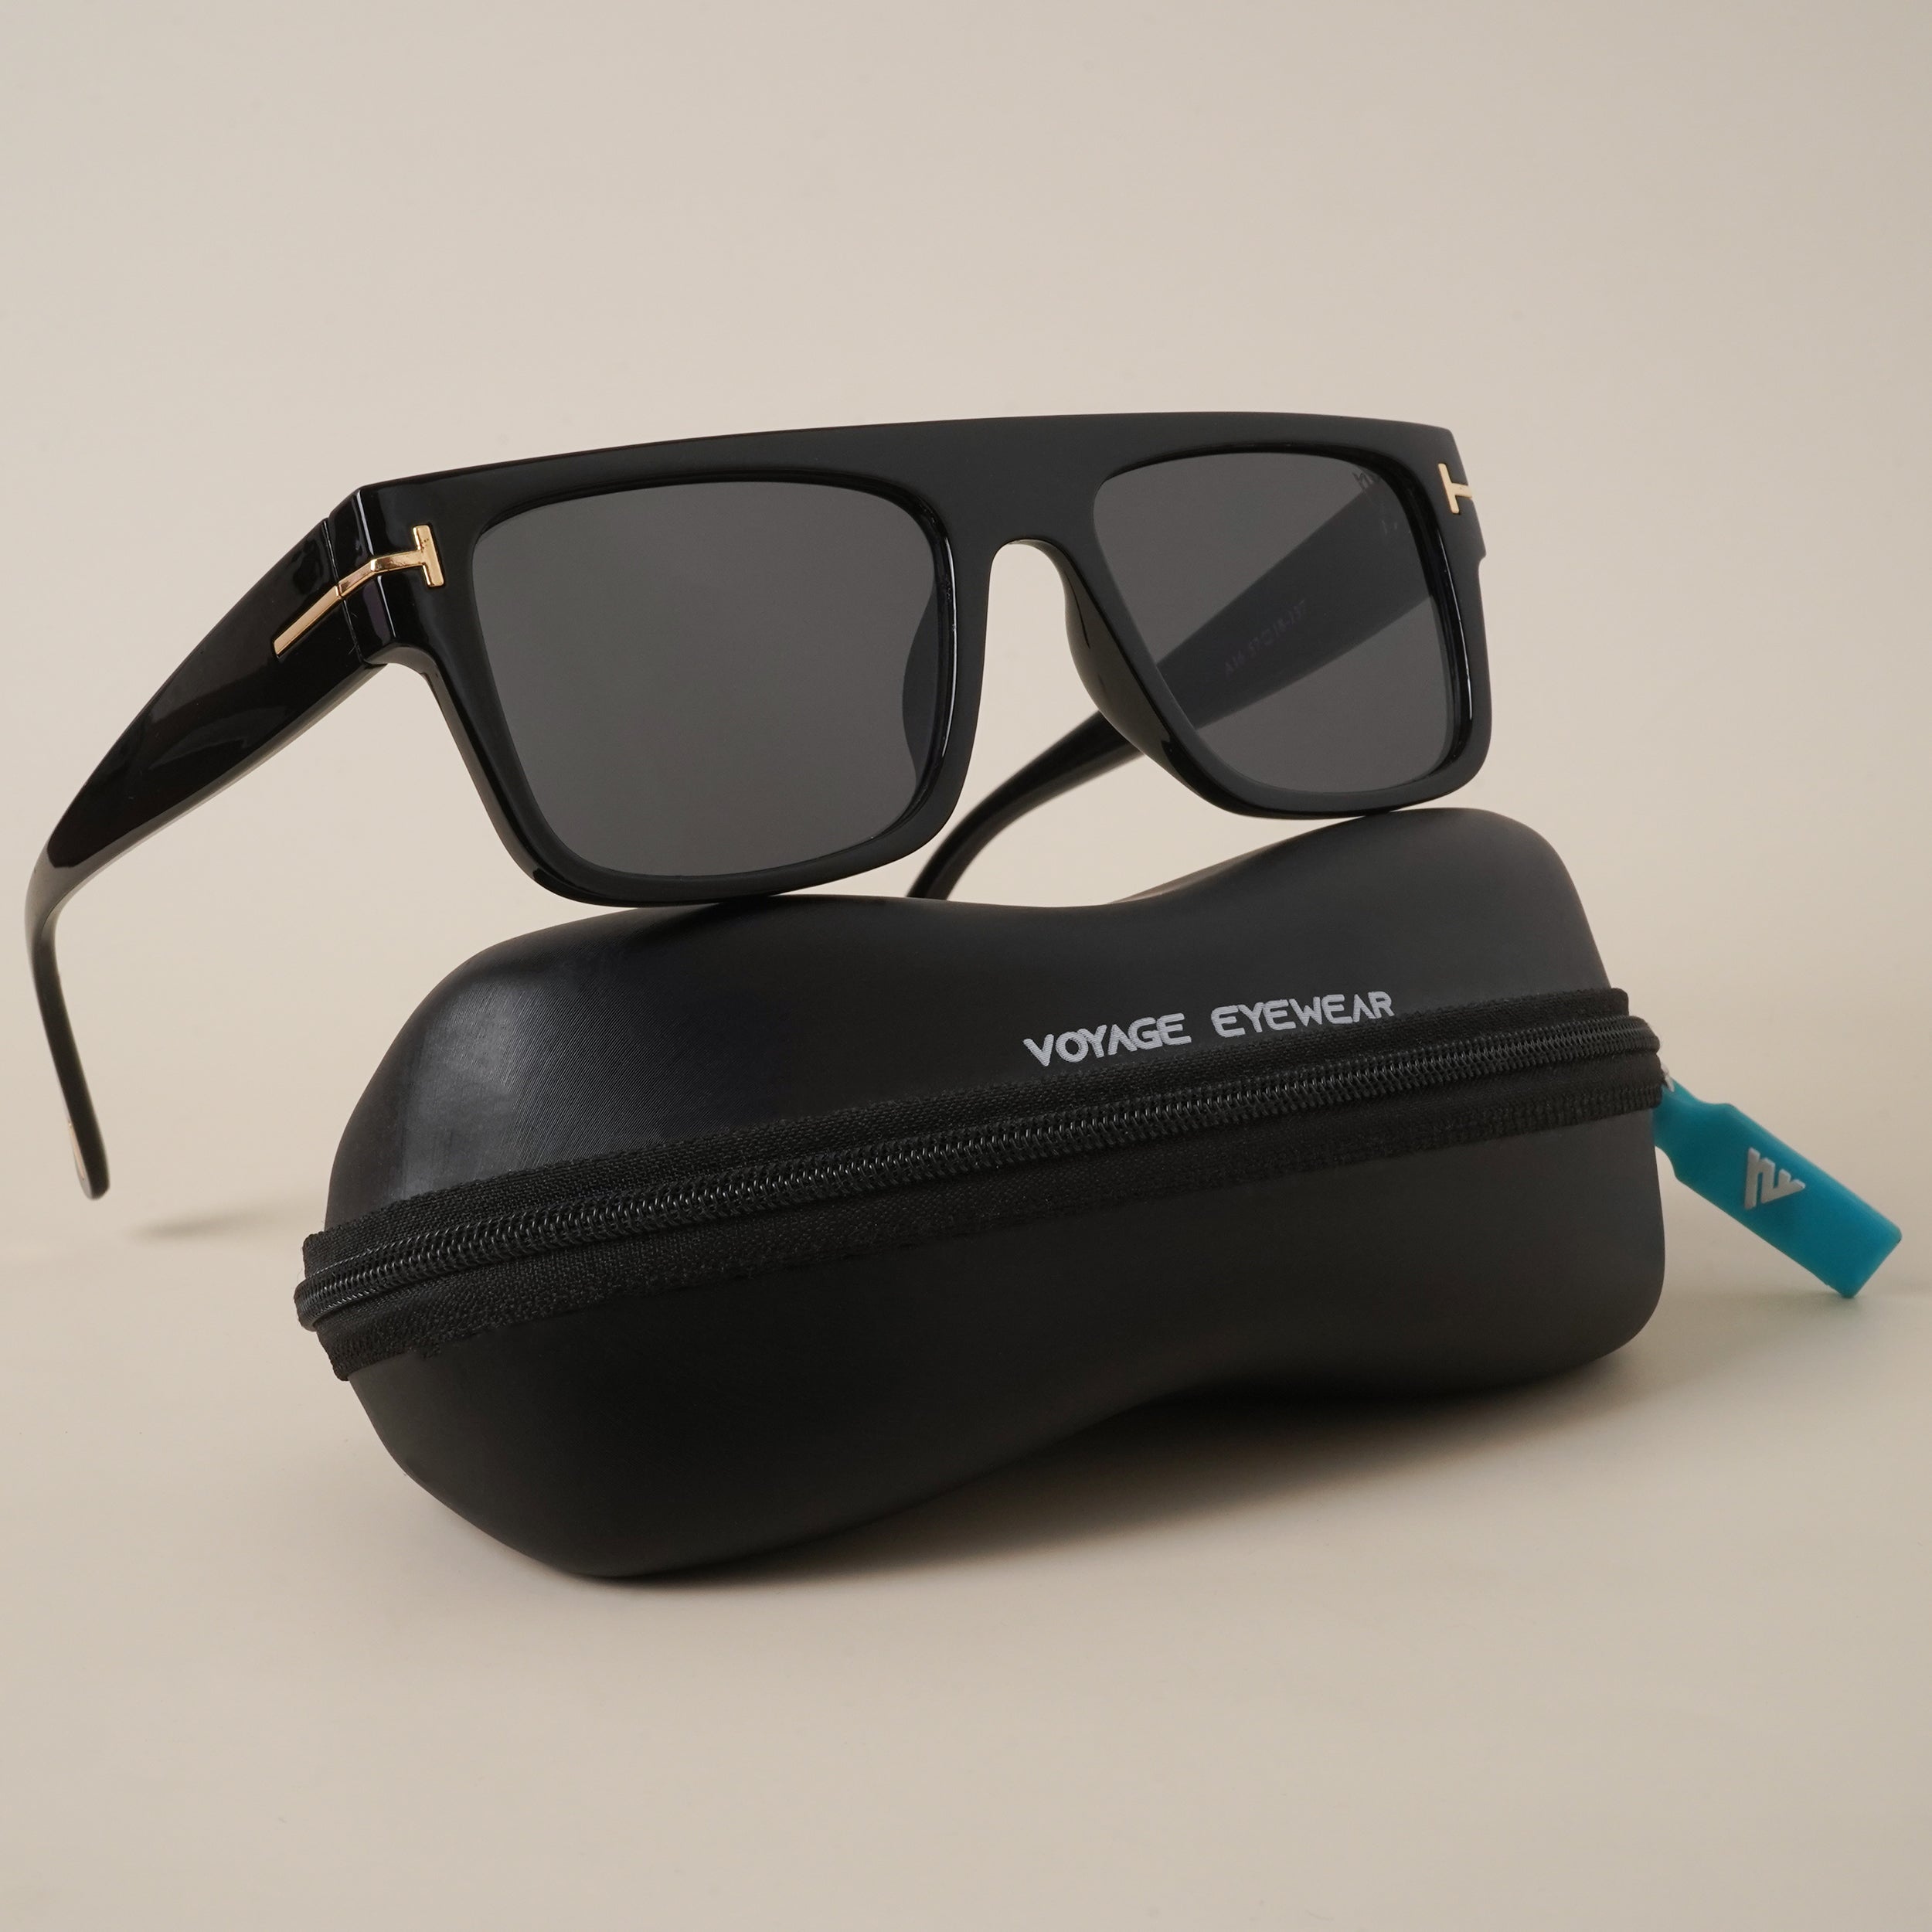 Voyage Black Wayfarer Sunglasses for Men & Women - MG3953